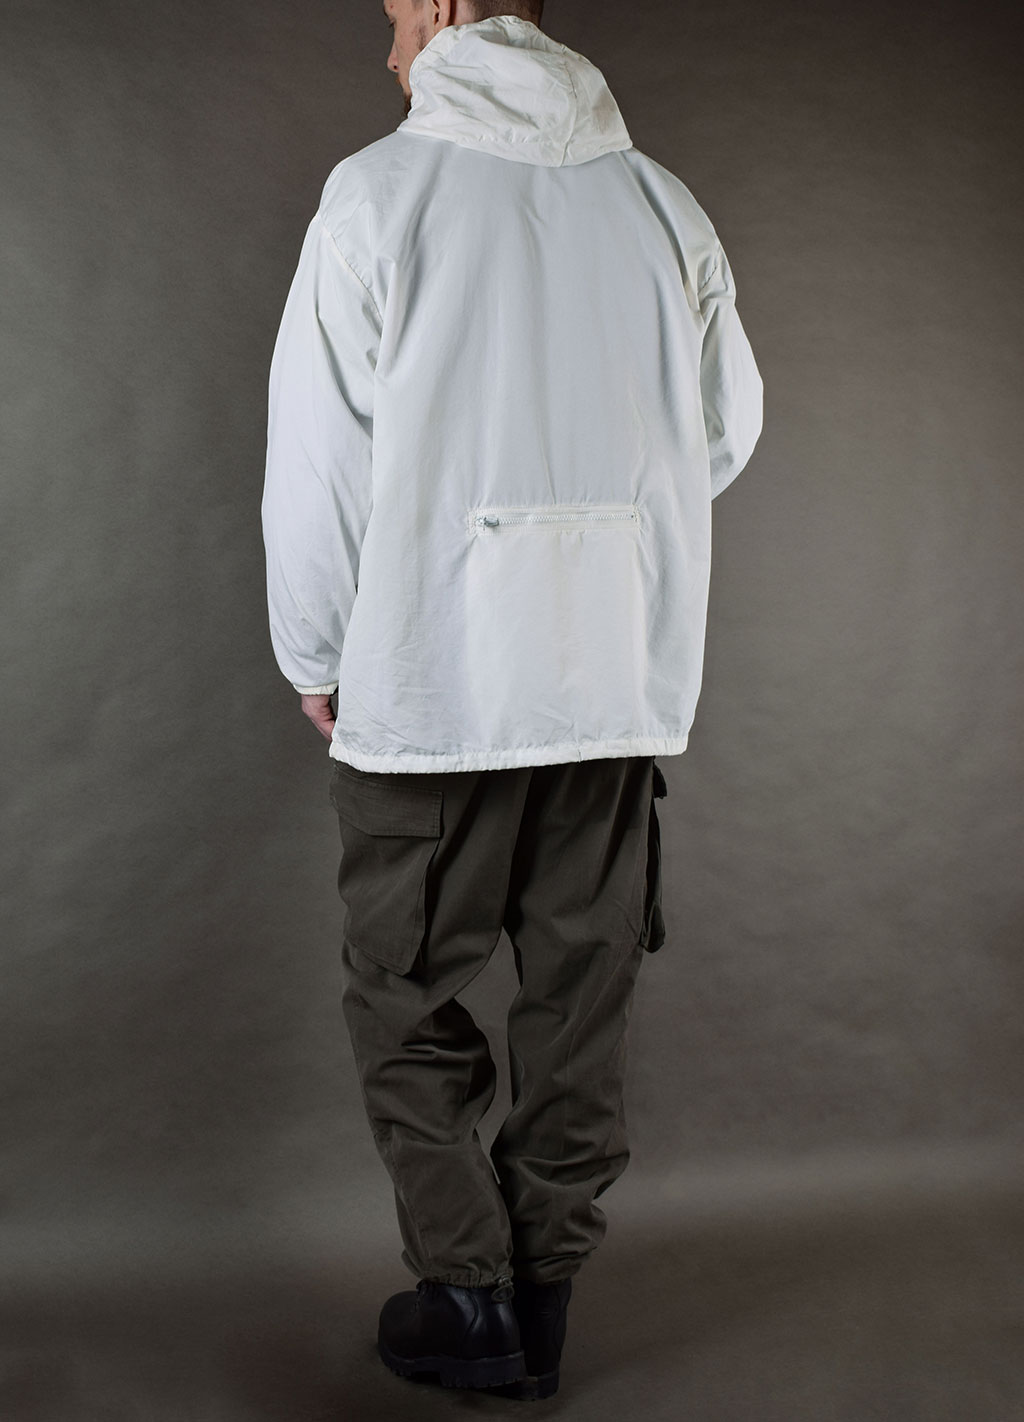 Куртка маскировочная нейлон white б/у Австрия